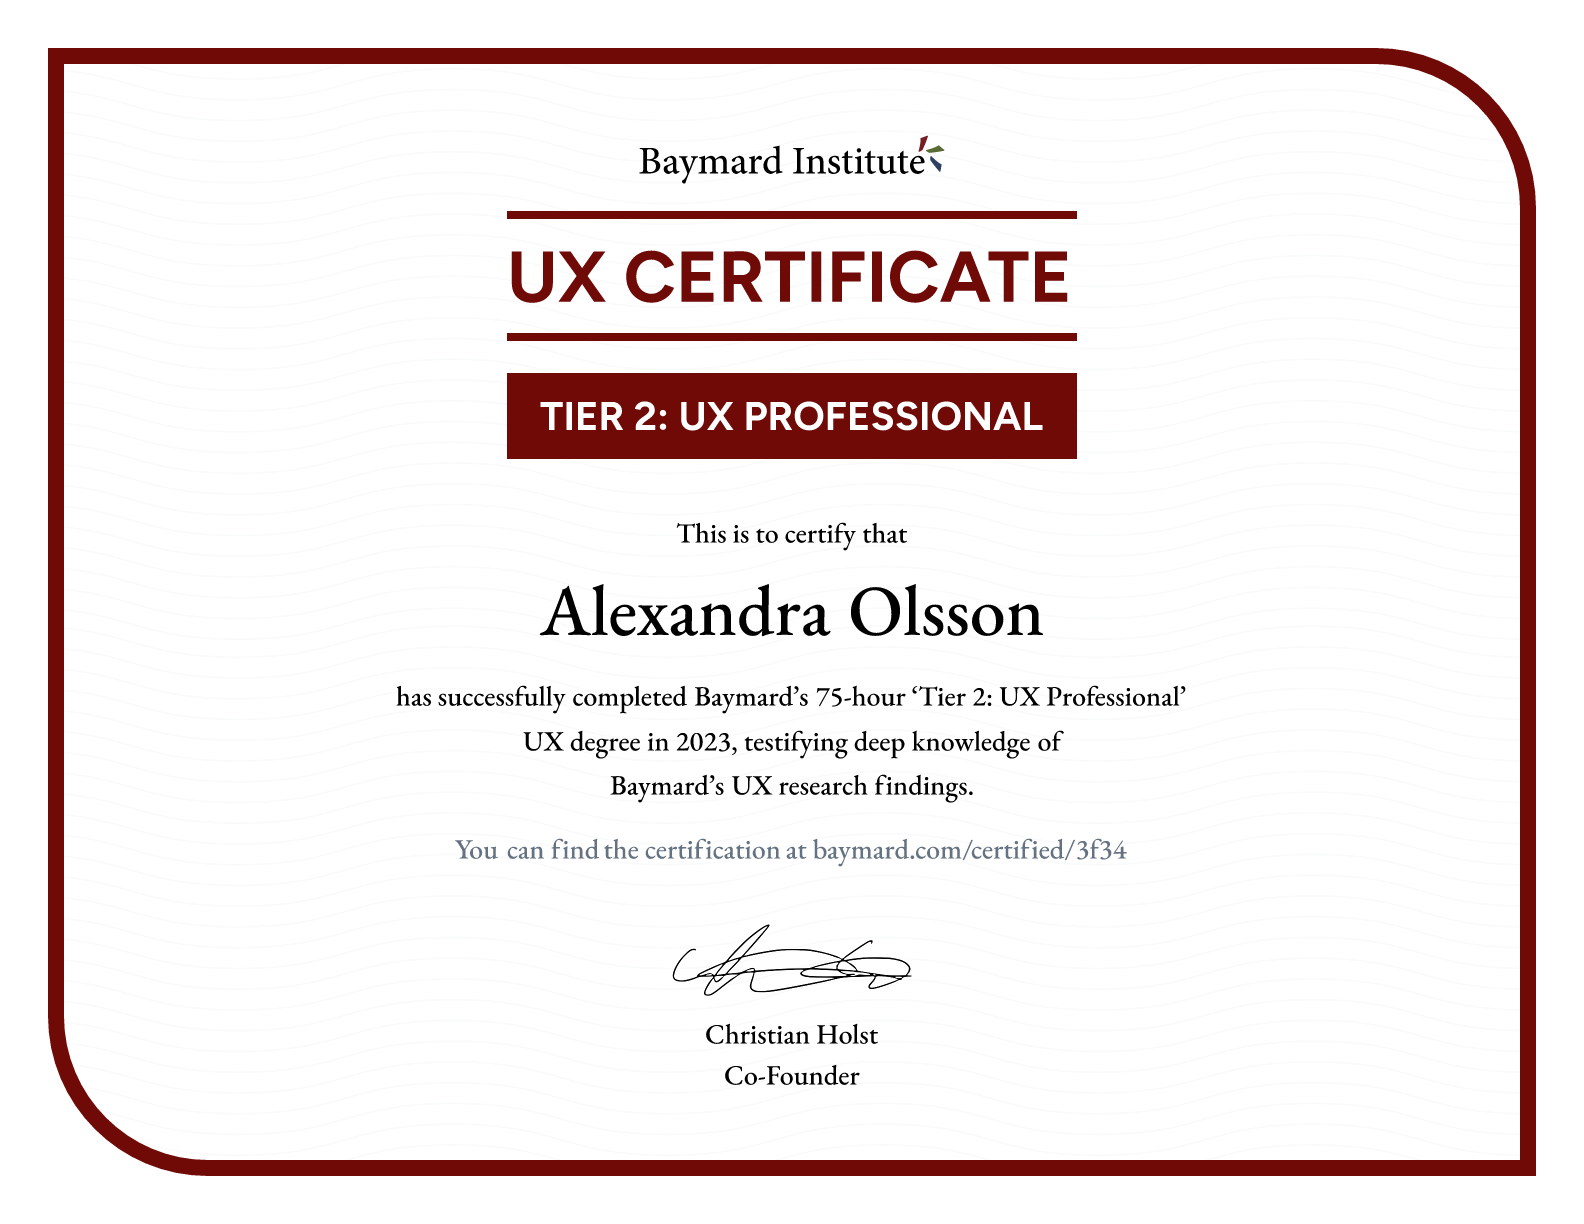 Alexandra Olsson’s certificate